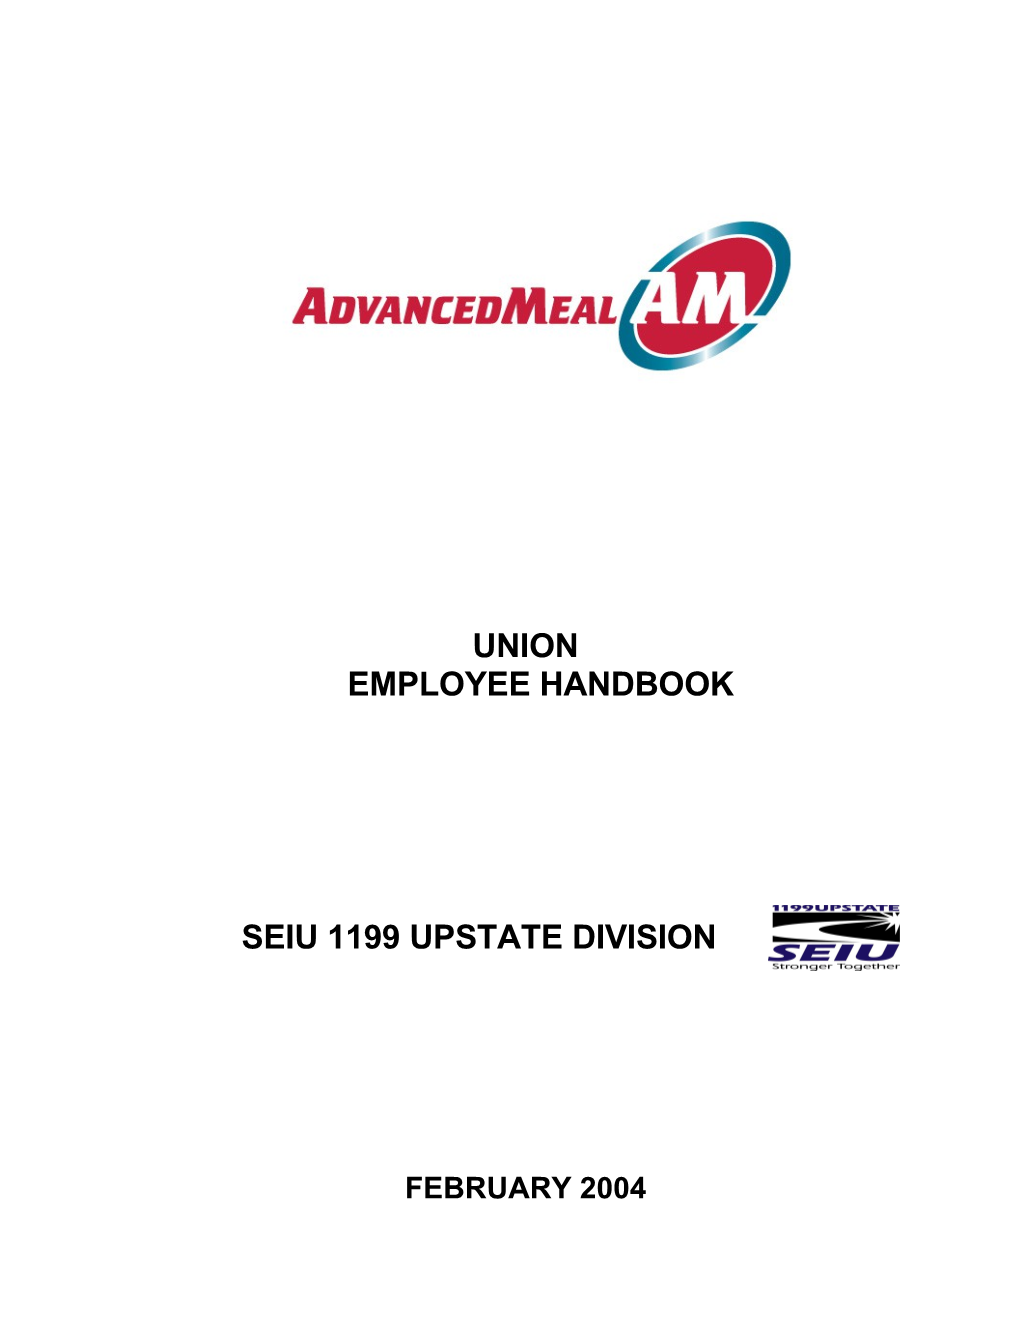 Employee Handbook (Union) Revised (H0075687;1)